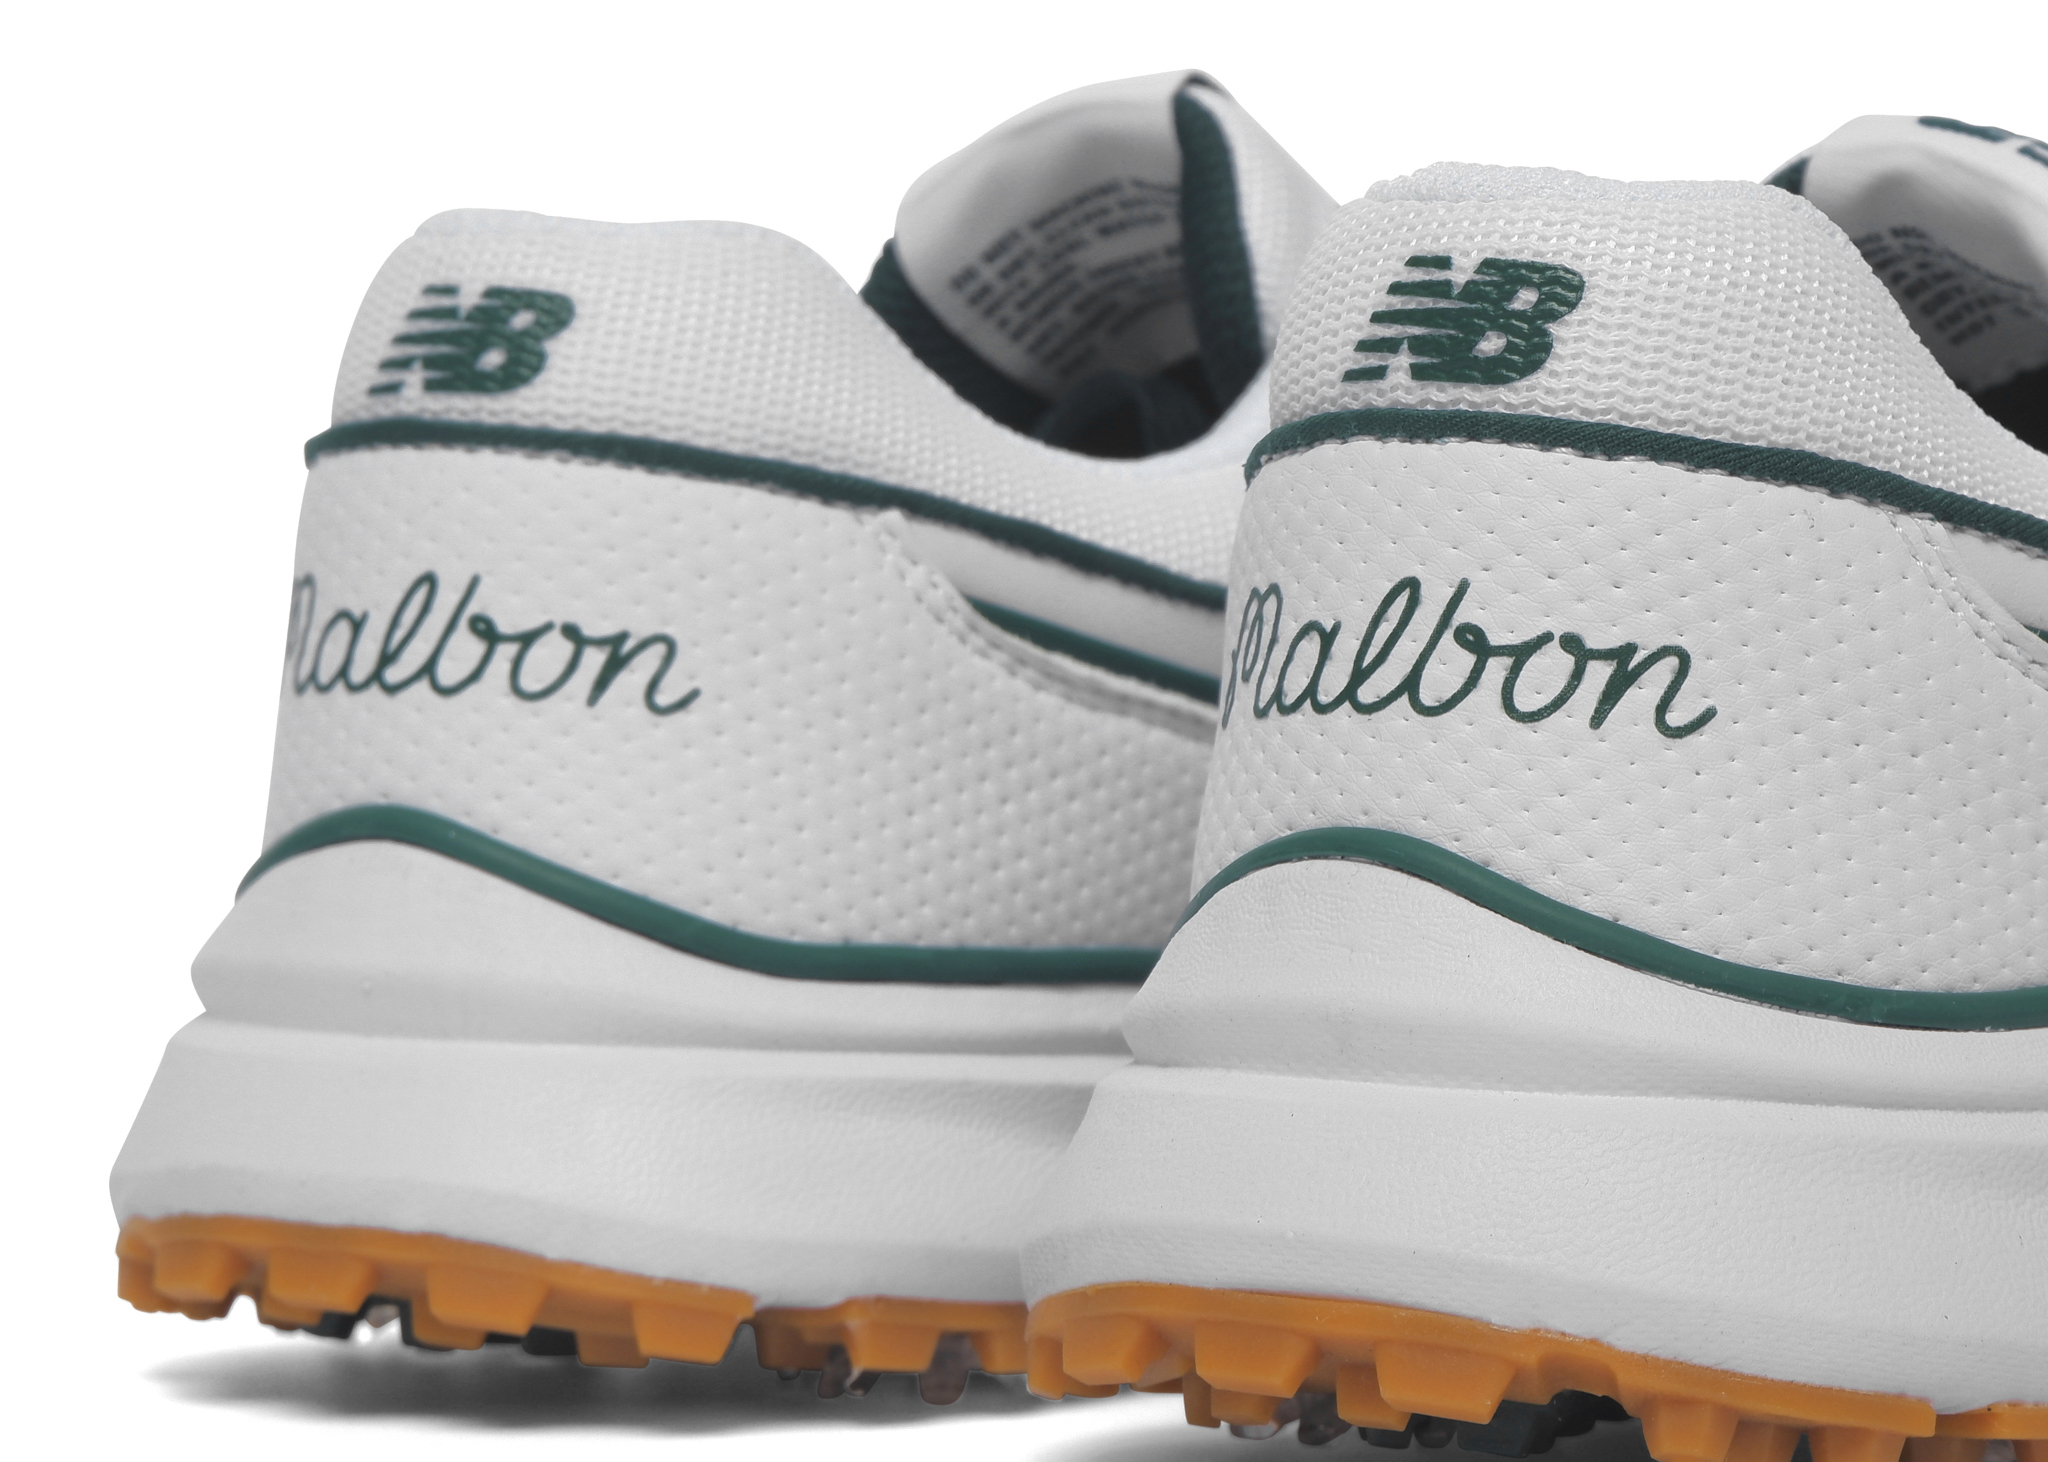 New Balance 997G Malbon Golf White/Green Men's - Sneakers - US